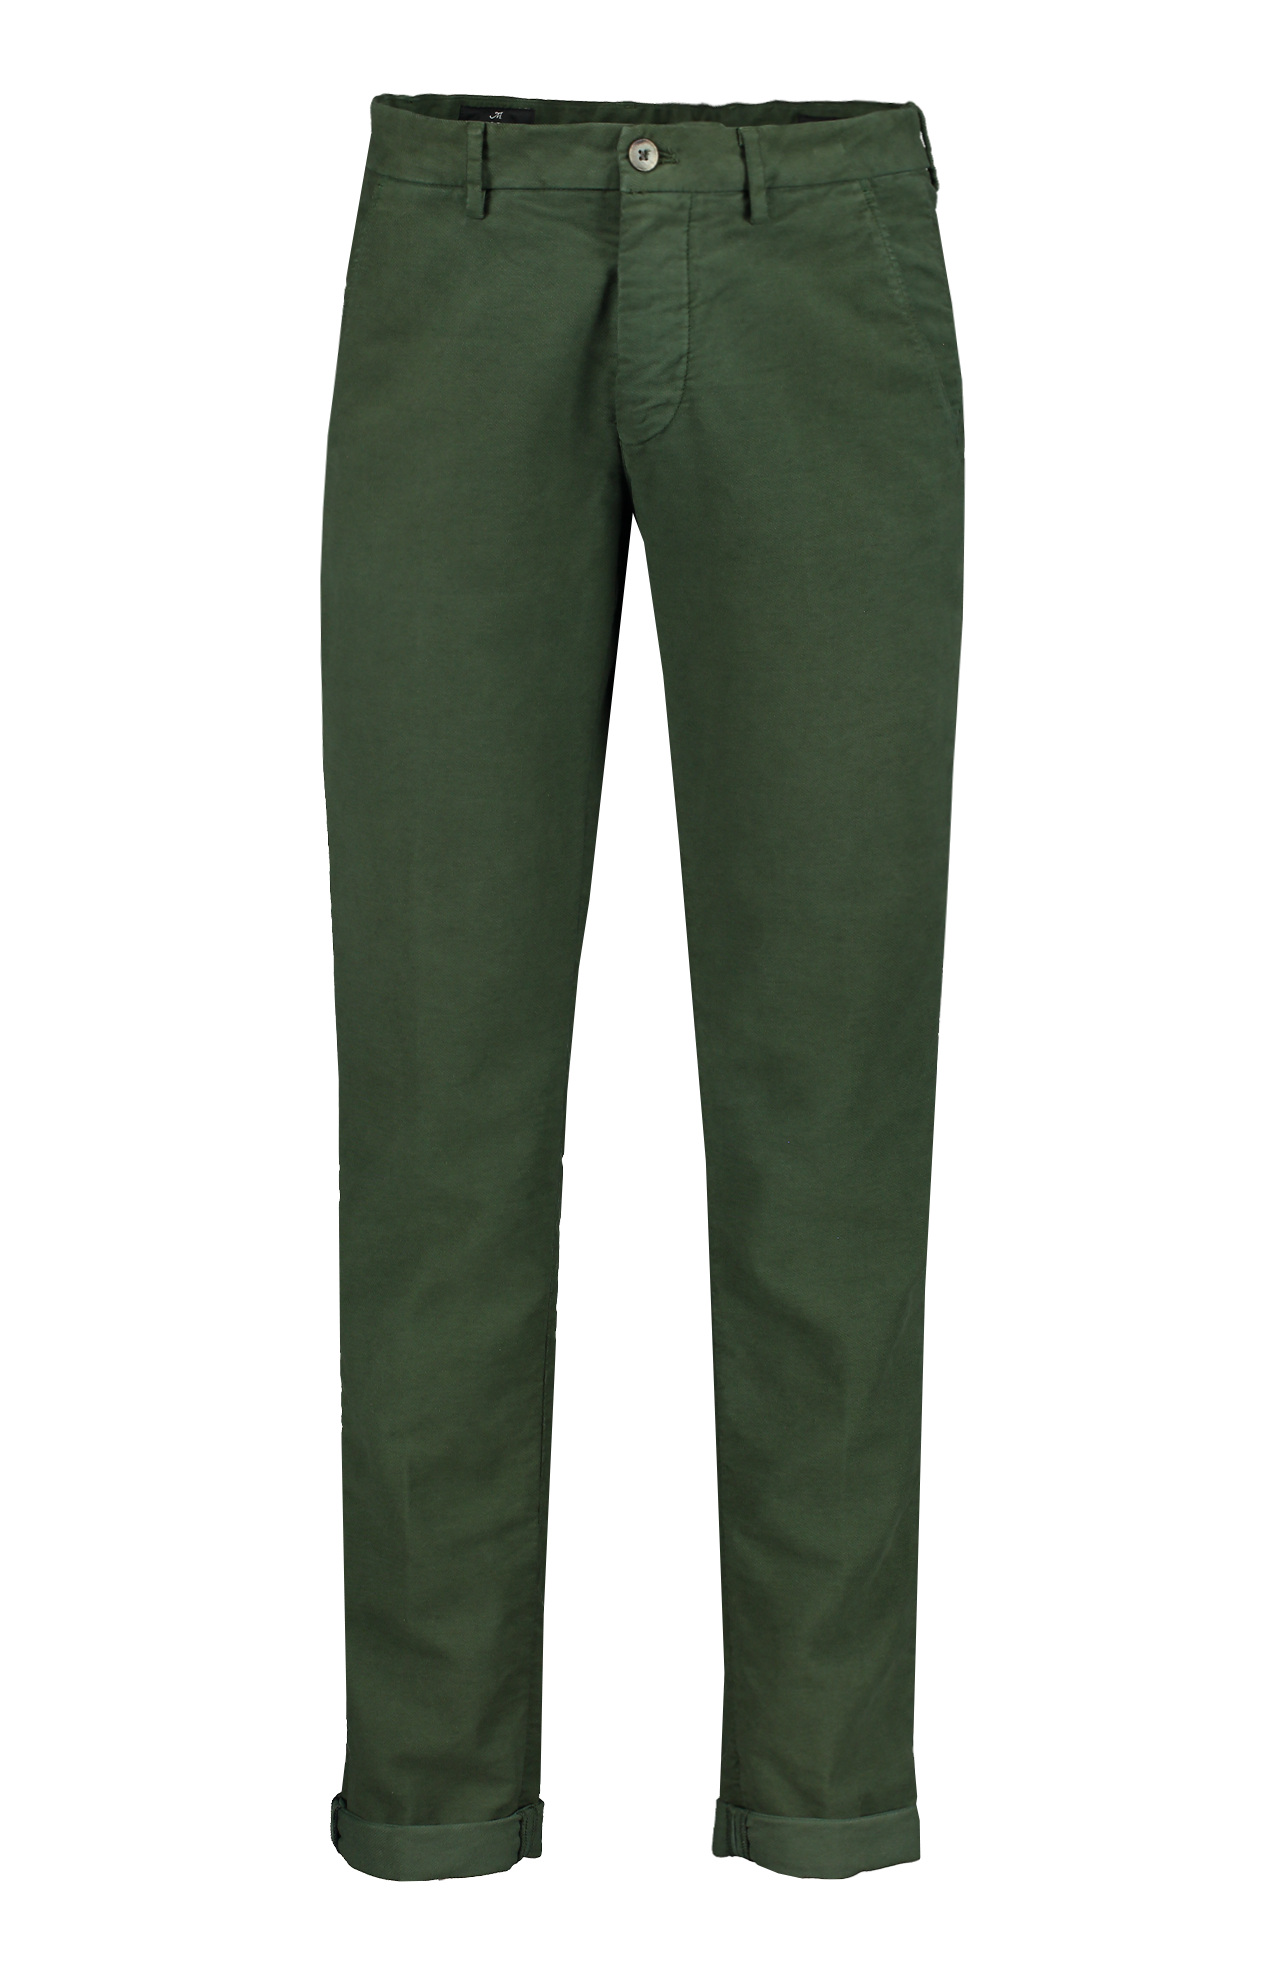 Mason's Torino Style Moleskin Chino Pant in Pine Mannequin Image  (6955219976307)